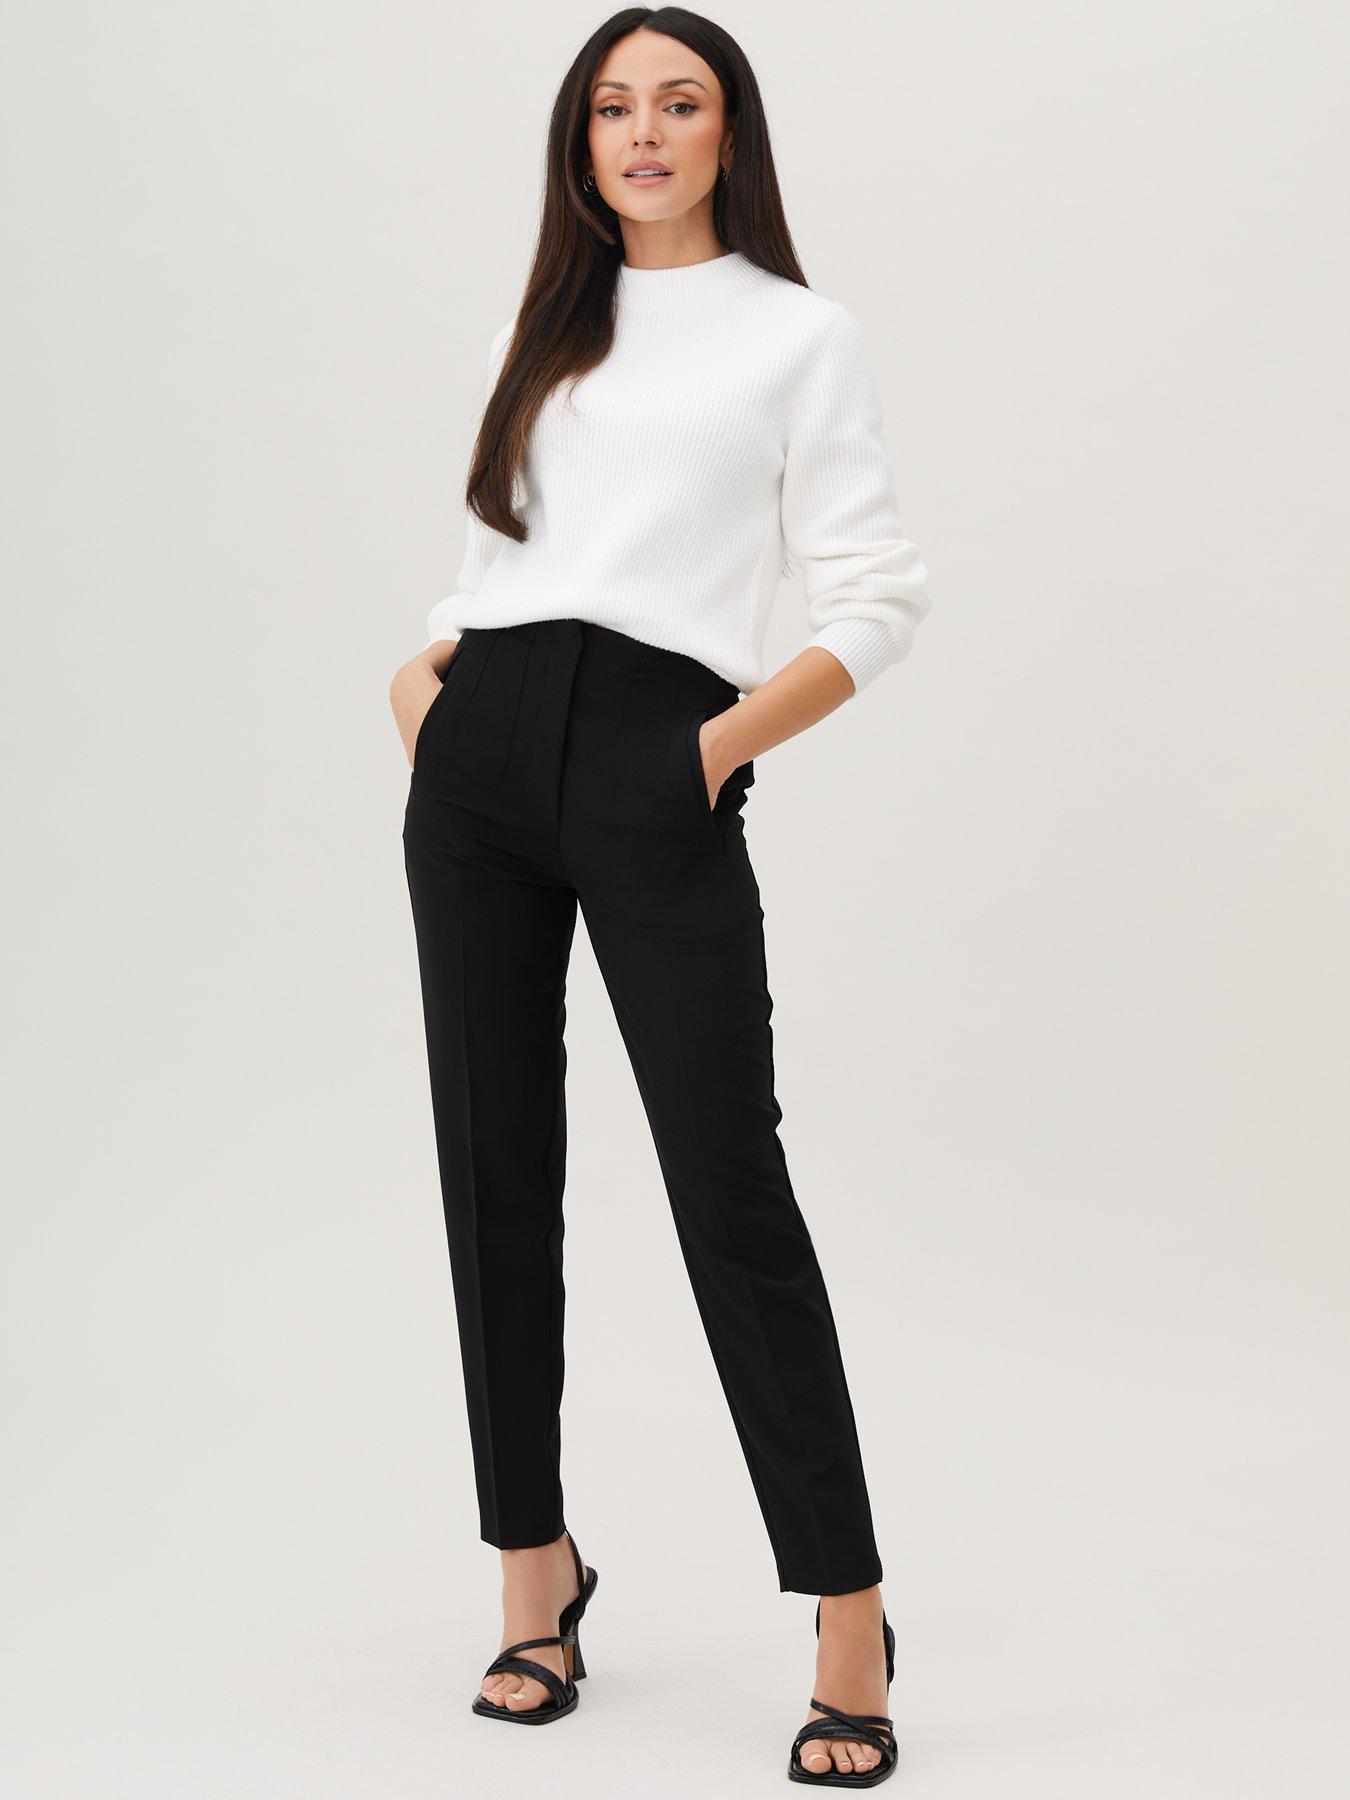 WOMEN FASHION Trousers Elegant Black M Zara Leggings discount 63% 